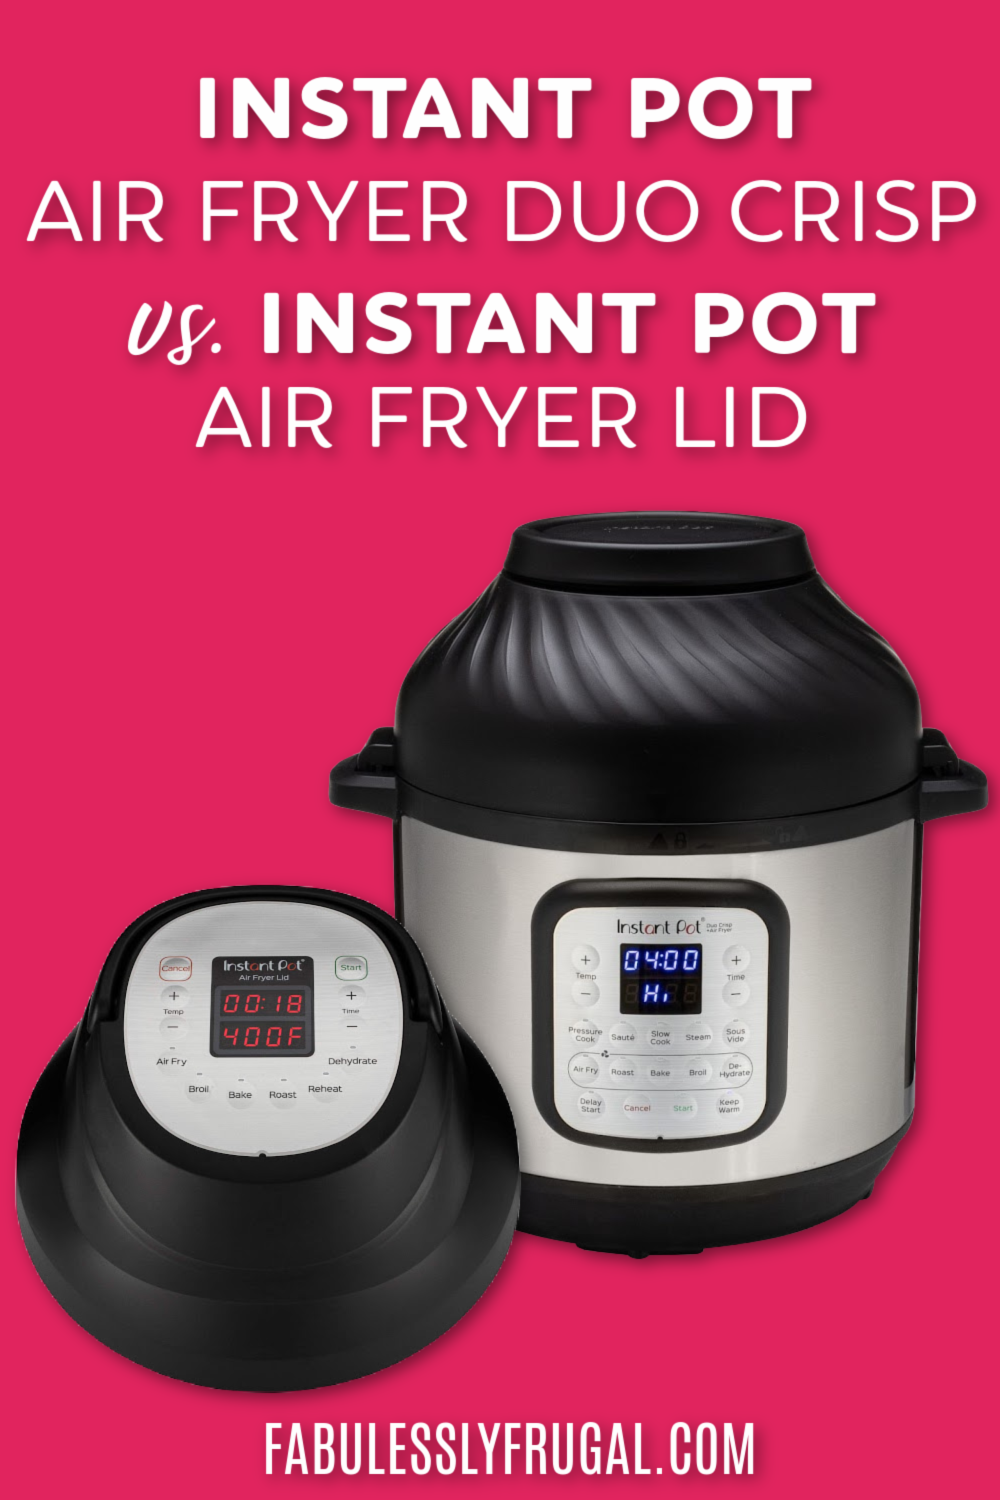 https://fabulesslyfrugal.com/wp-content/uploads/2021/02/instant-pot-air-fryer-duo-crisp-vs-instant-pot-air-fryer-lid-Pinterest-Pin-1.png